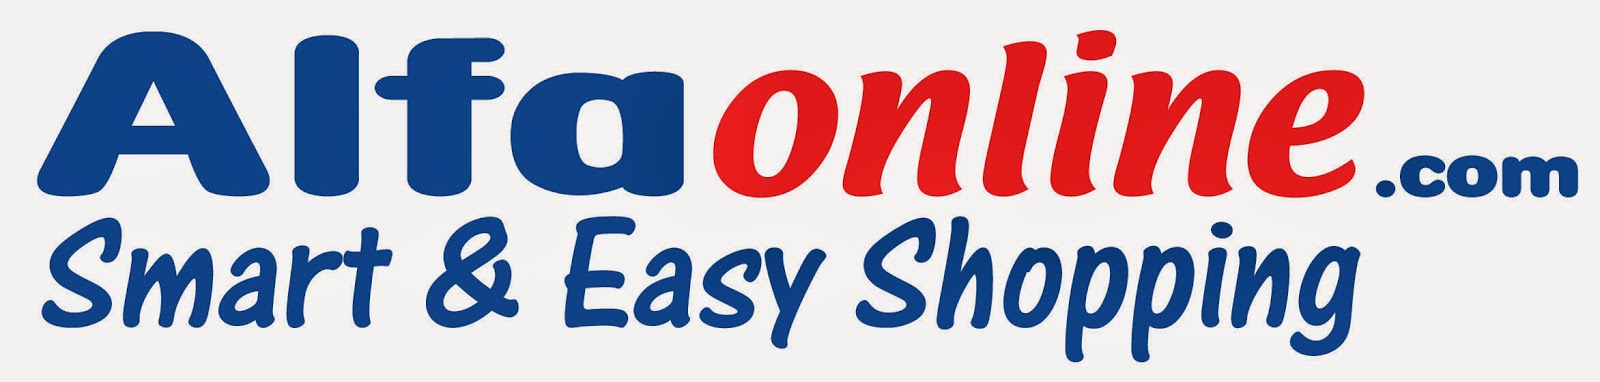 Easy shop. Easily shop. Easy shopping. Easy shop logo. Магазин easy